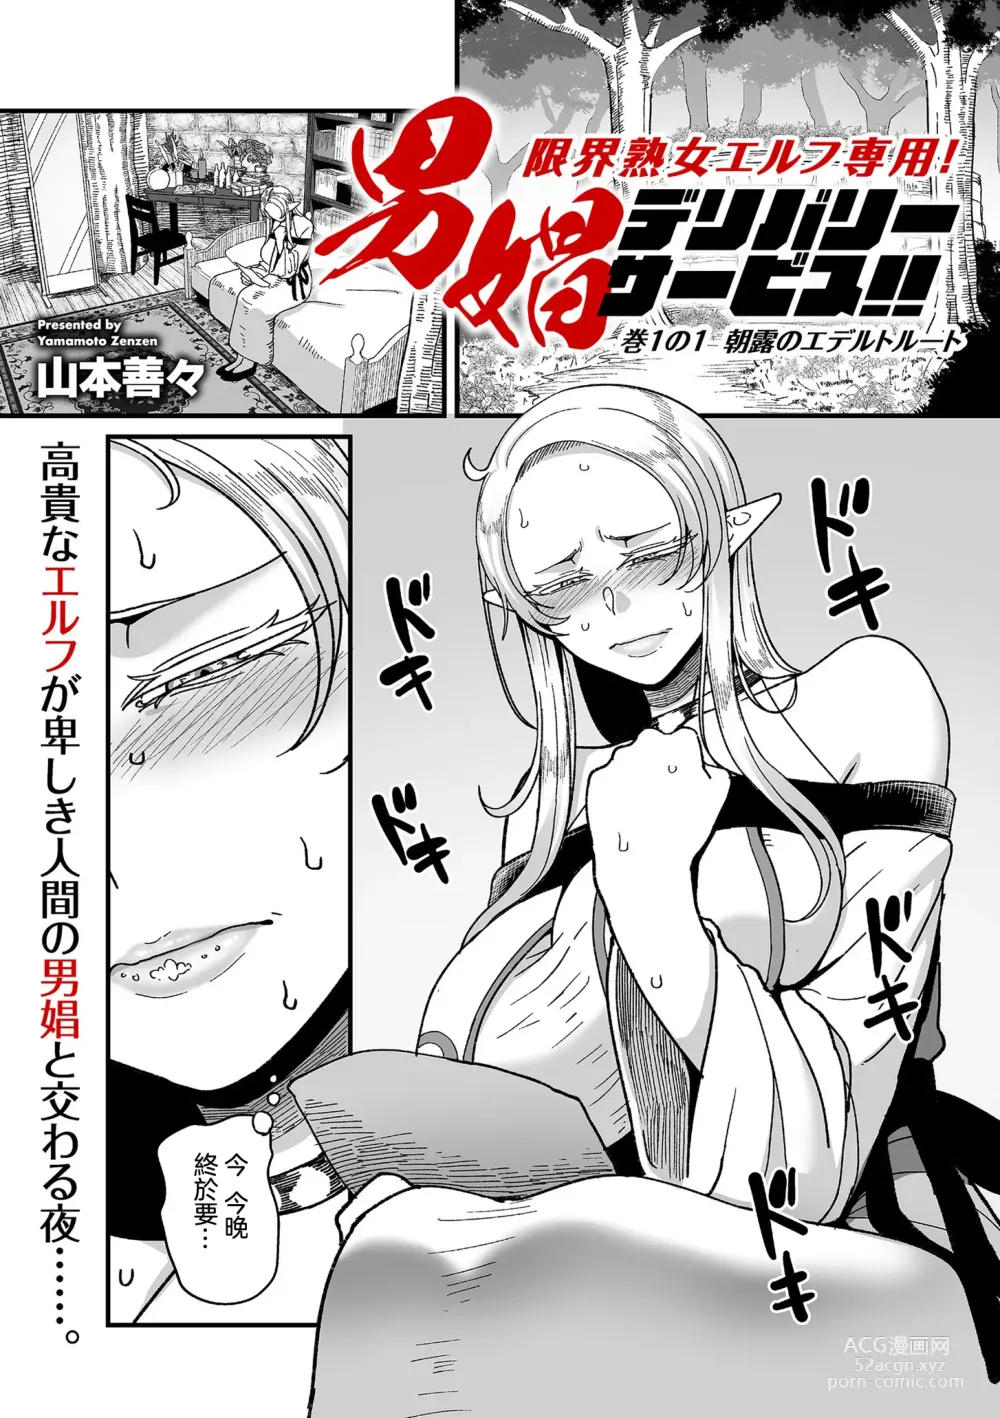 Page 1 of manga Genkai Jukujo Elf! Danshou Delivery Service!! Maki 1 no 1